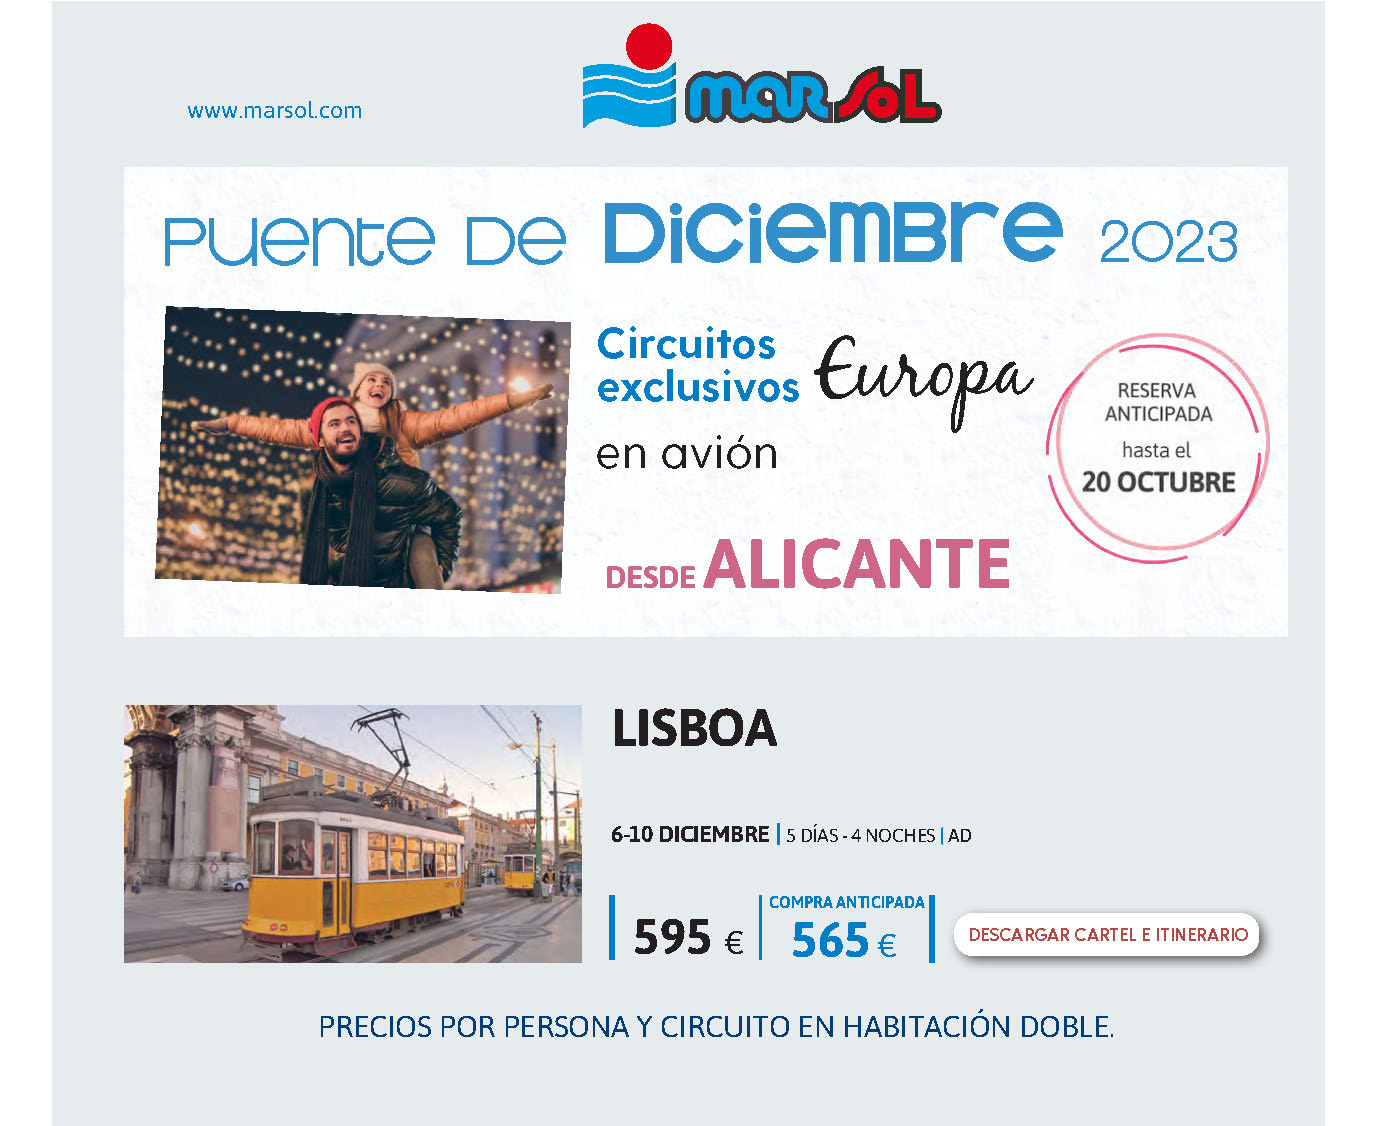 Ofertas Marsol Puente de Diciembre 2023 circuitos 5 dias Lisboa salidas 6 diciembre vuelo directo desde Alicante